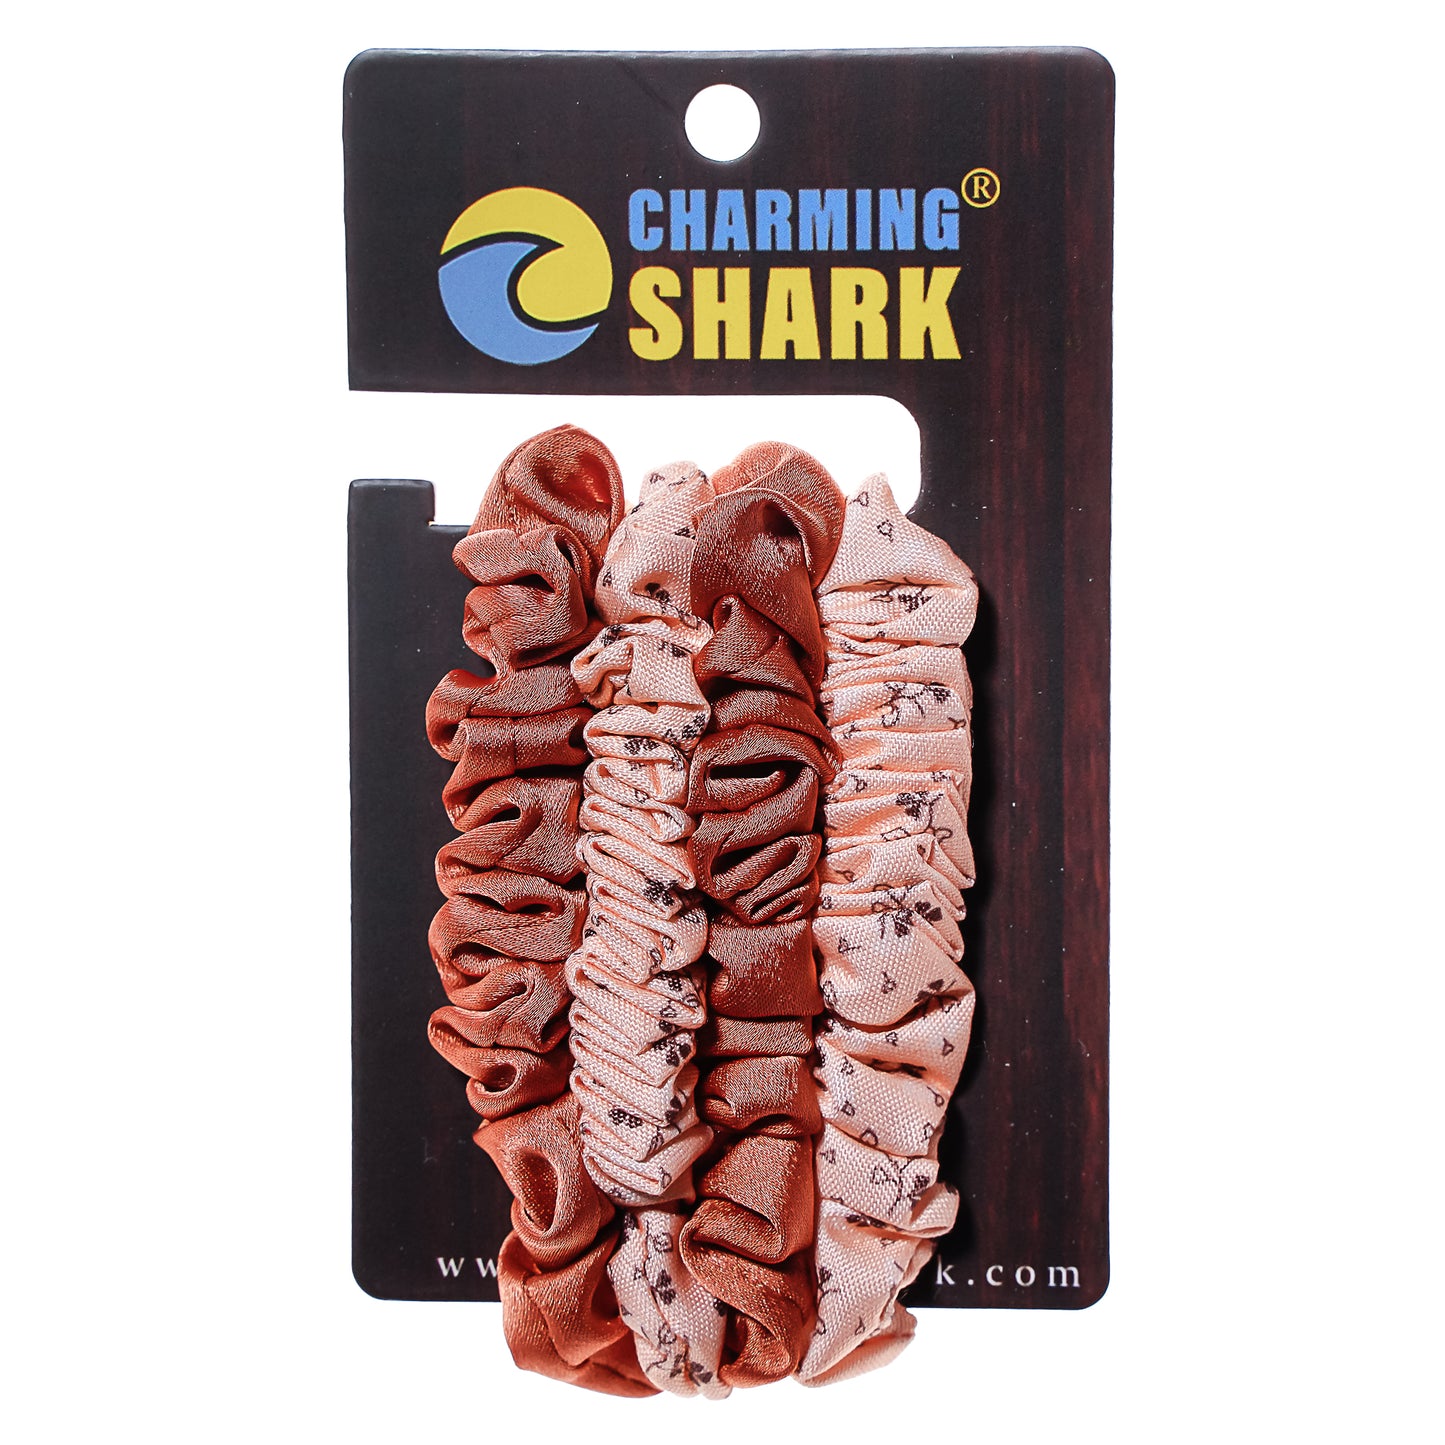 Charming Shark Hair Ties